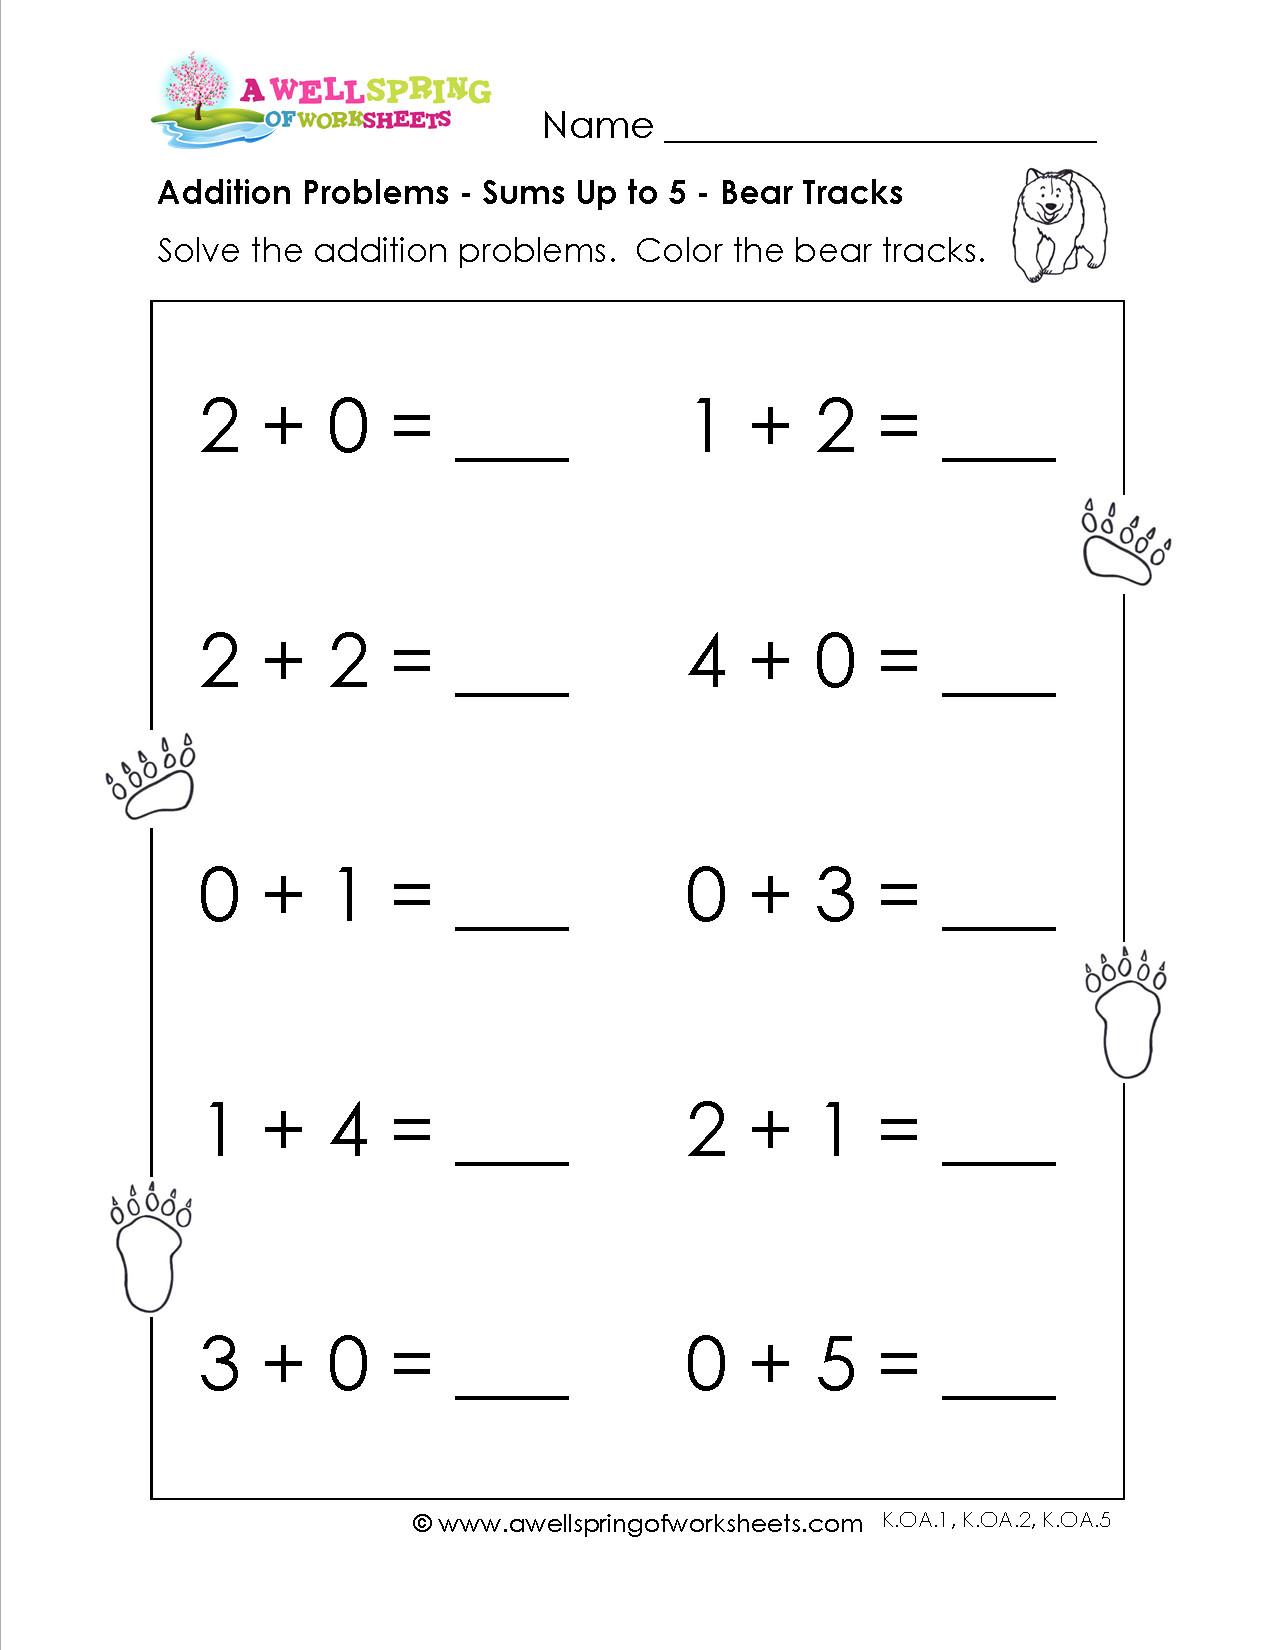 Free Math Worksheets Second Grade 2 Addition Add 2 Digit Plus 1 Digit Missing Addend